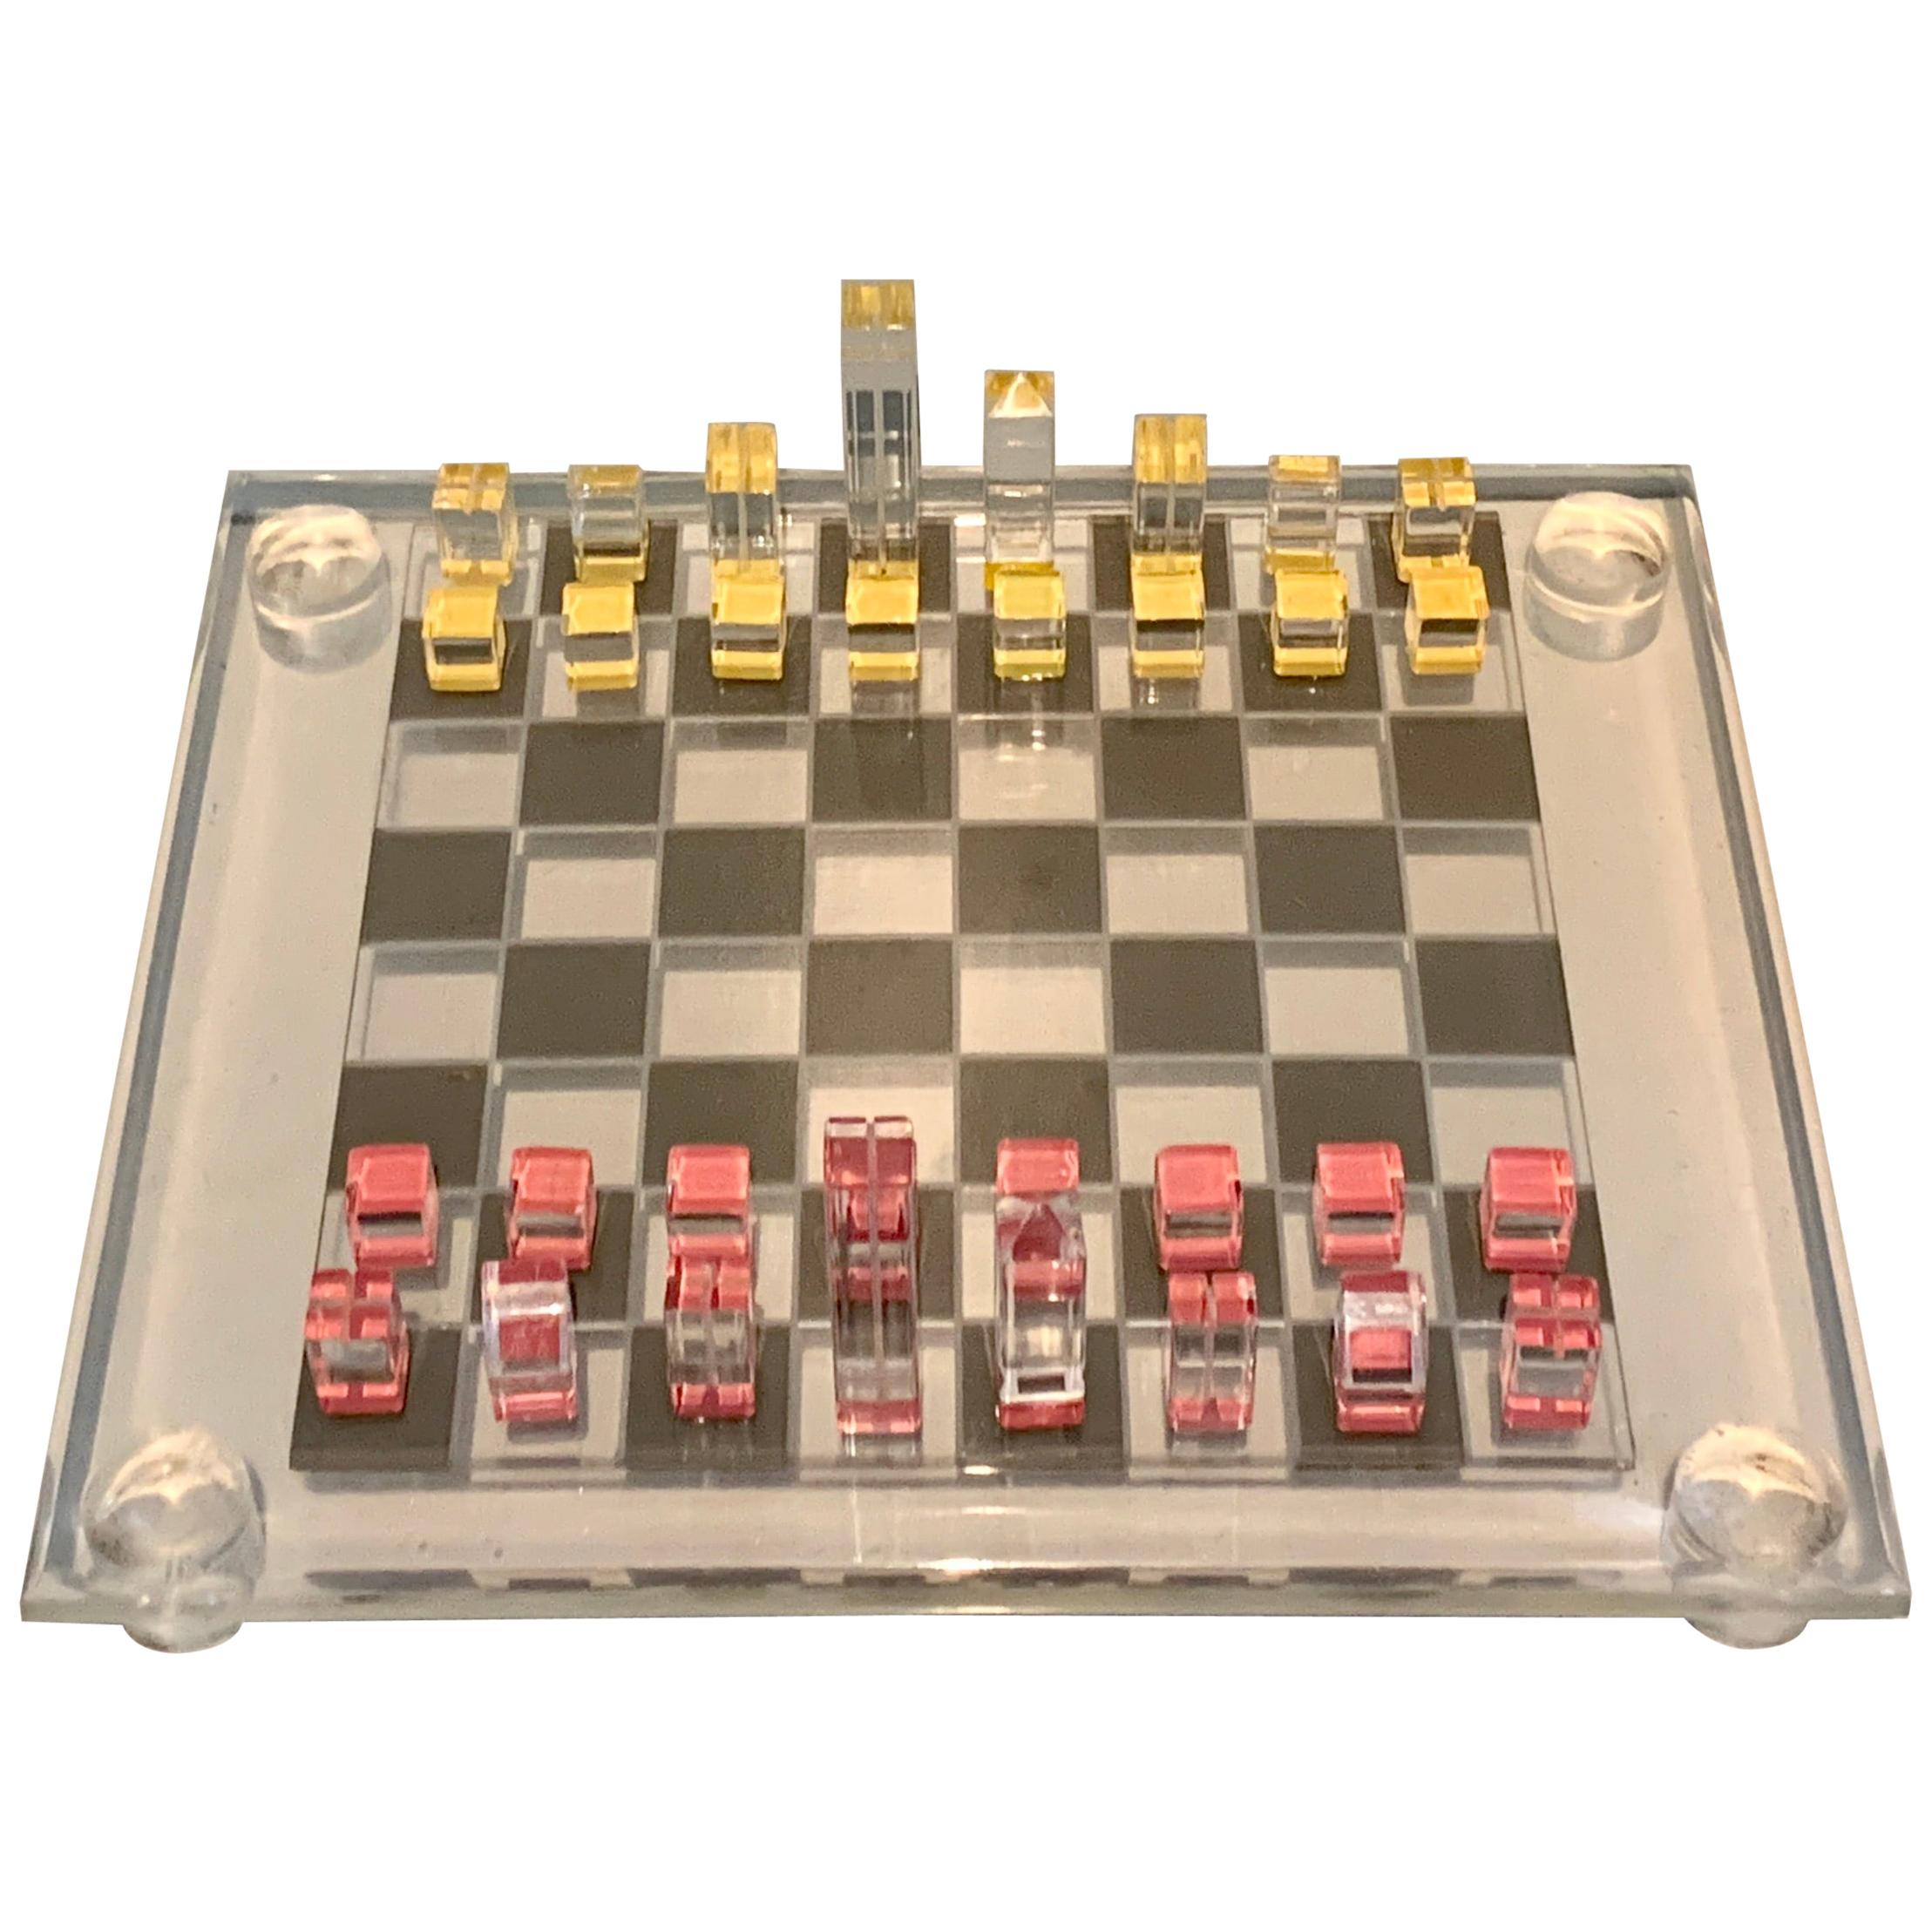 Signed Acrylic Modernist Bauhaus Inspired Chess Set